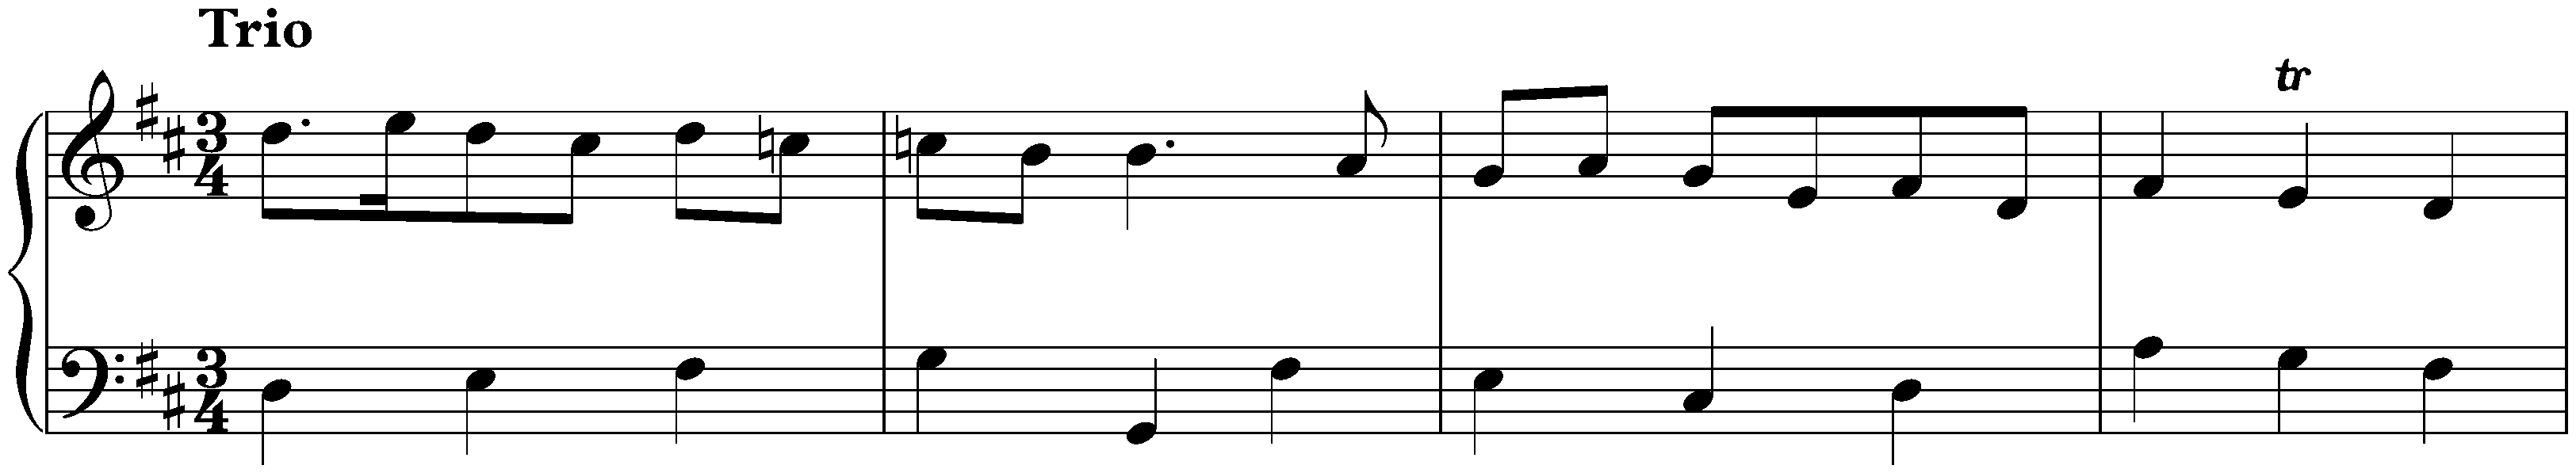 Sonata in D major, Hob. XVI:4; 2. Menuet – Trio